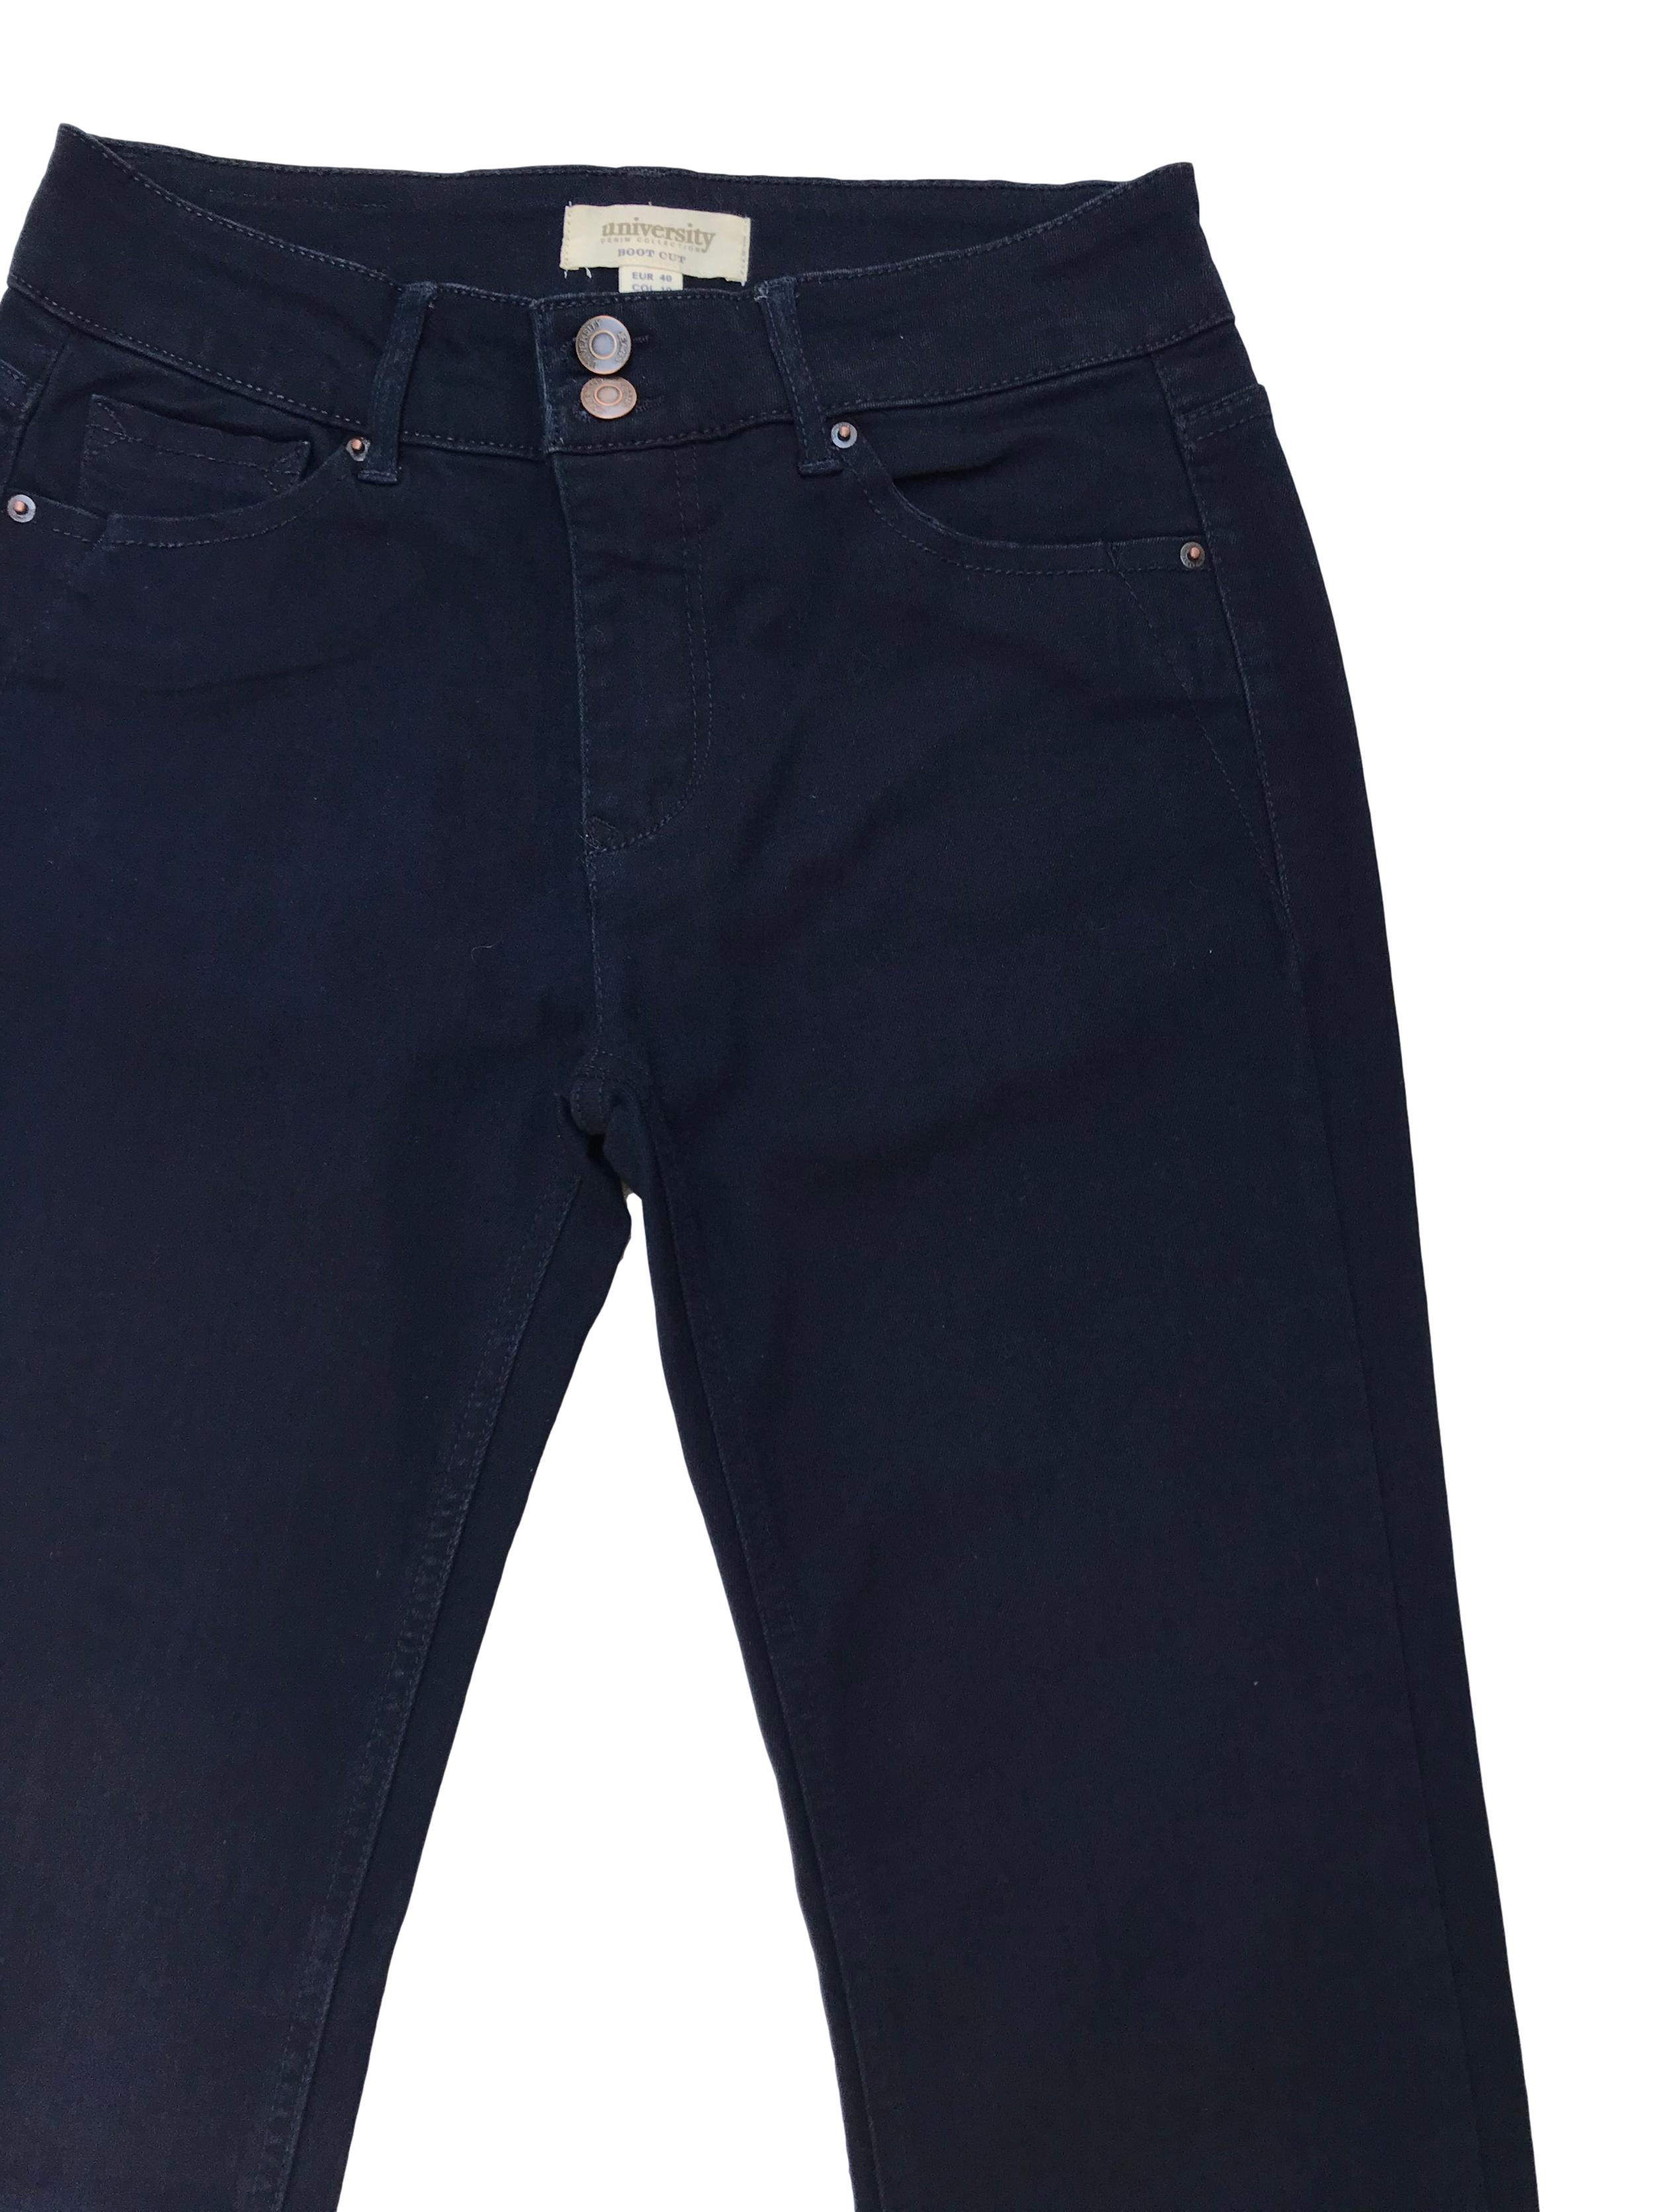 Pantalón jean University club azul oscuro ligeramente stretch, pierta recta. Nuevo. Cintura 76cm